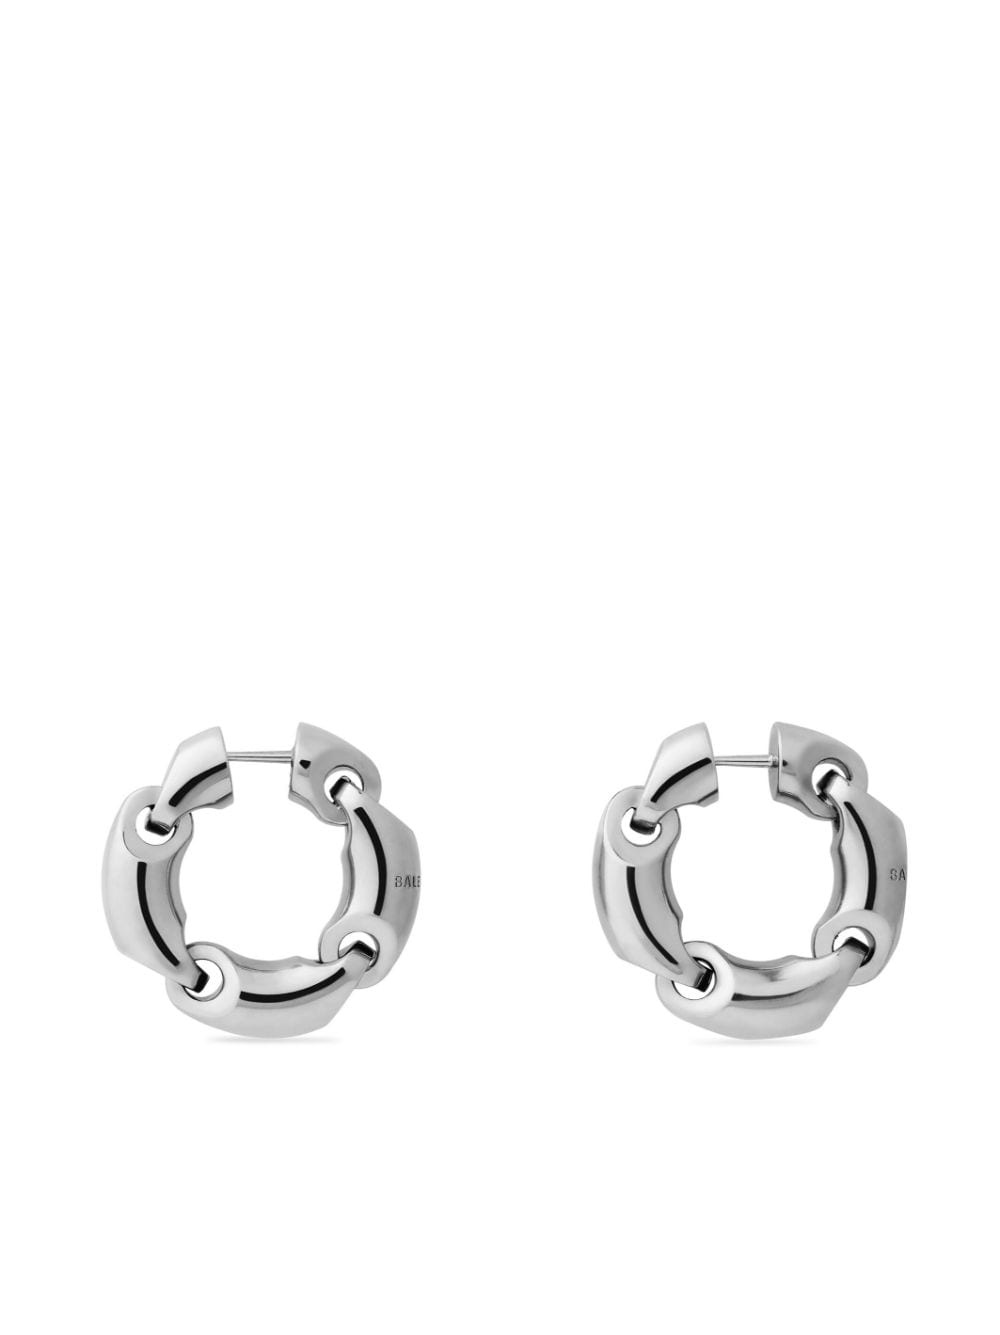 Solid 2.0 earrings - 4